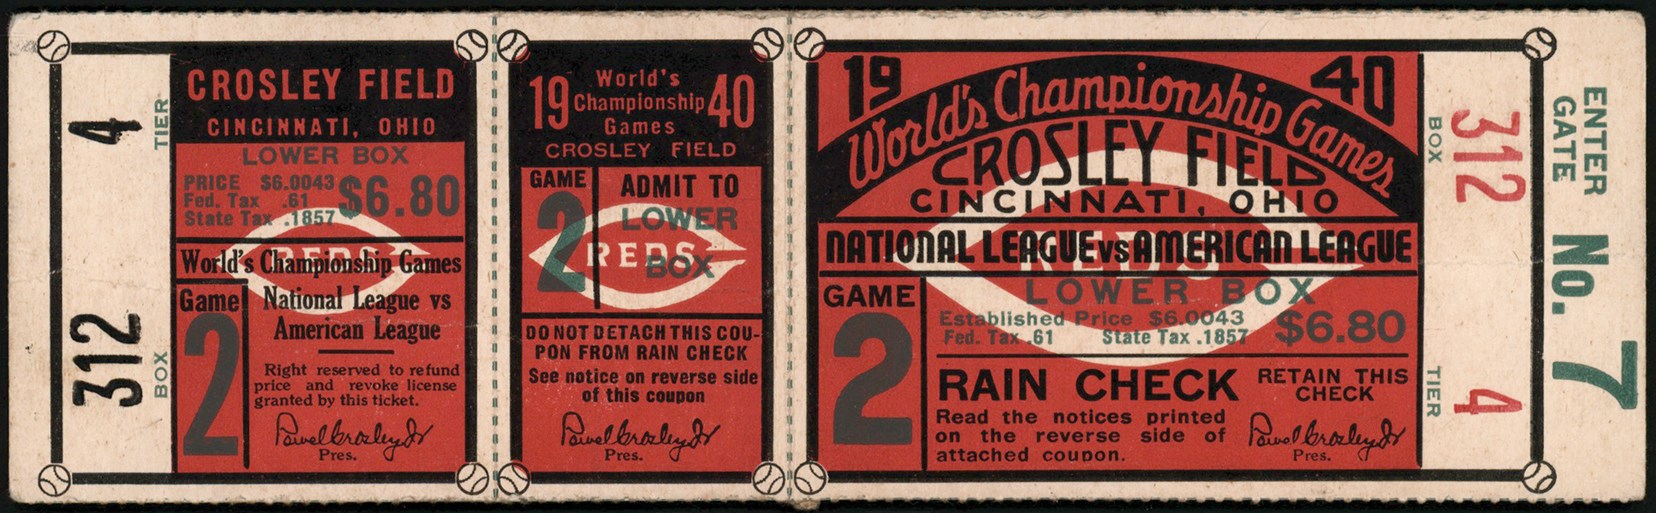 - 1940 Cincinnati Reds World Series Game 2 Full Ticket